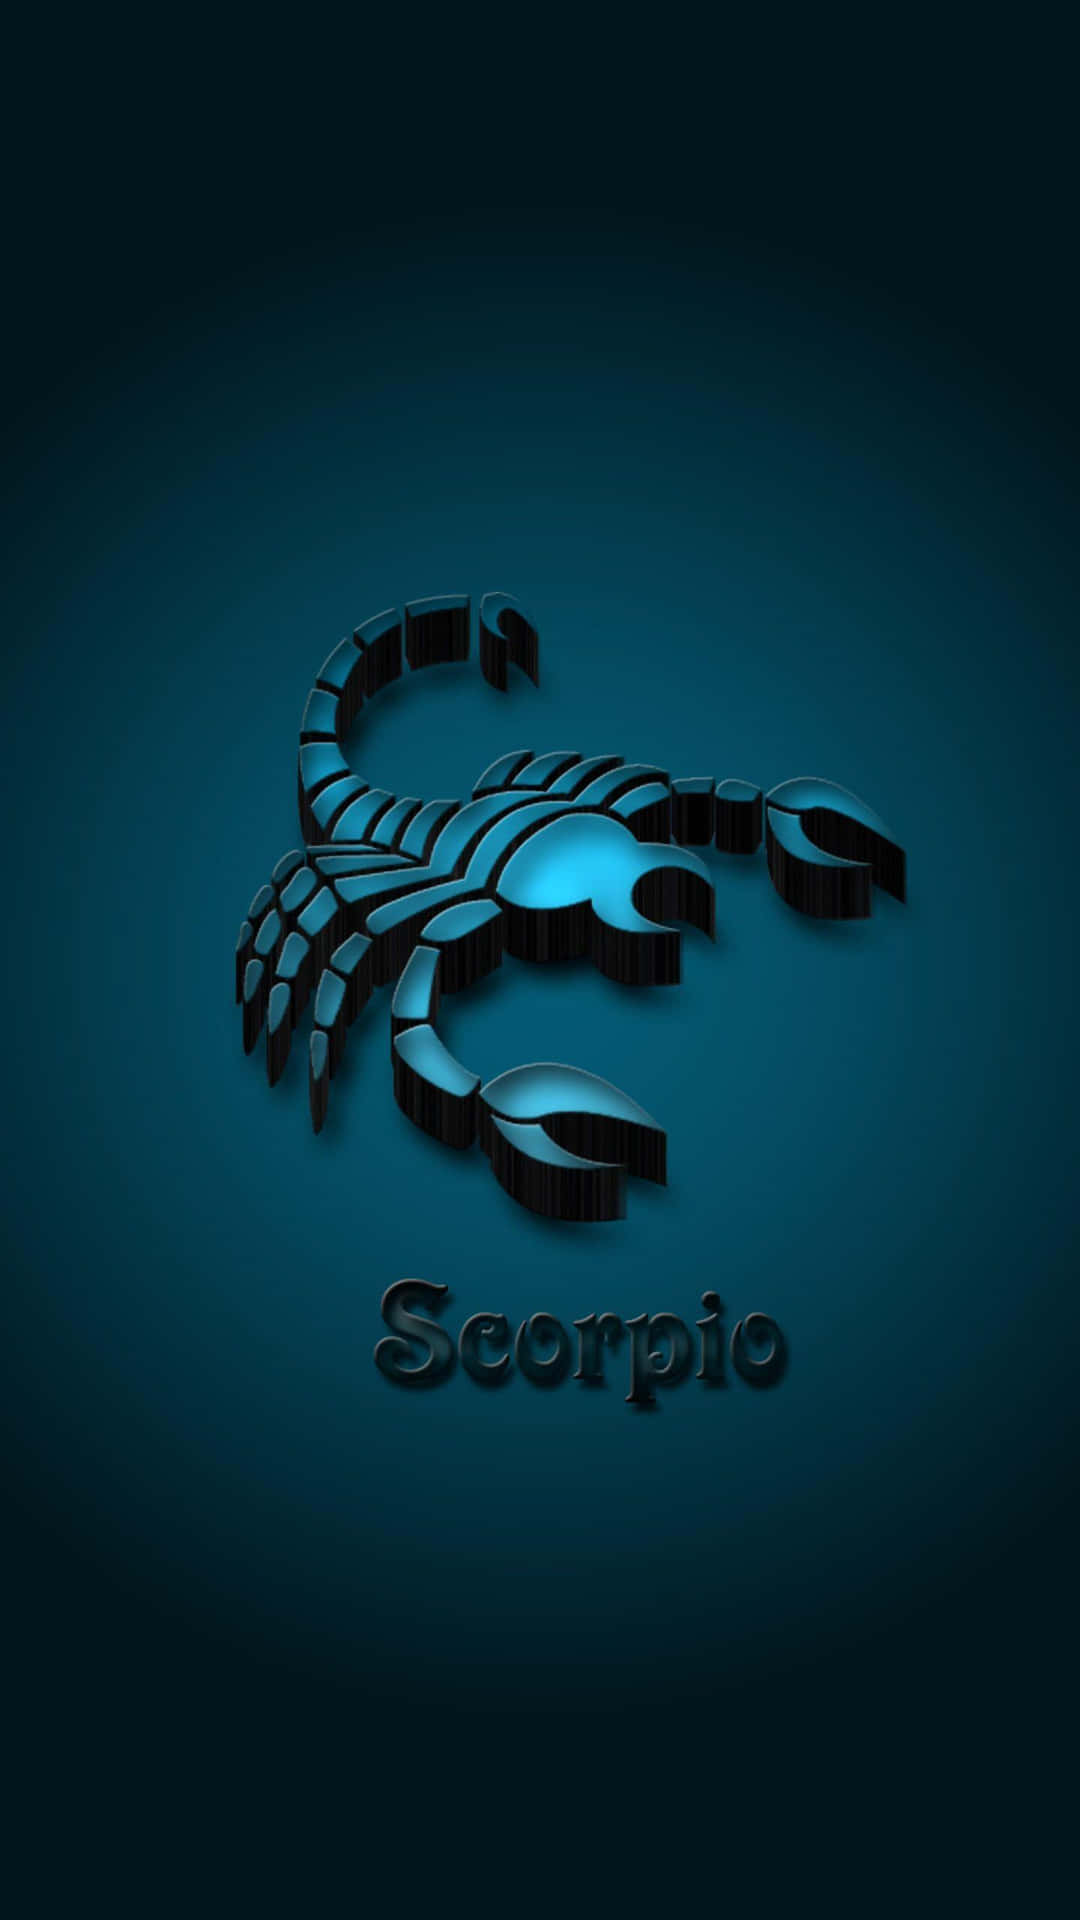 A Scorpion Logo On A Dark Background